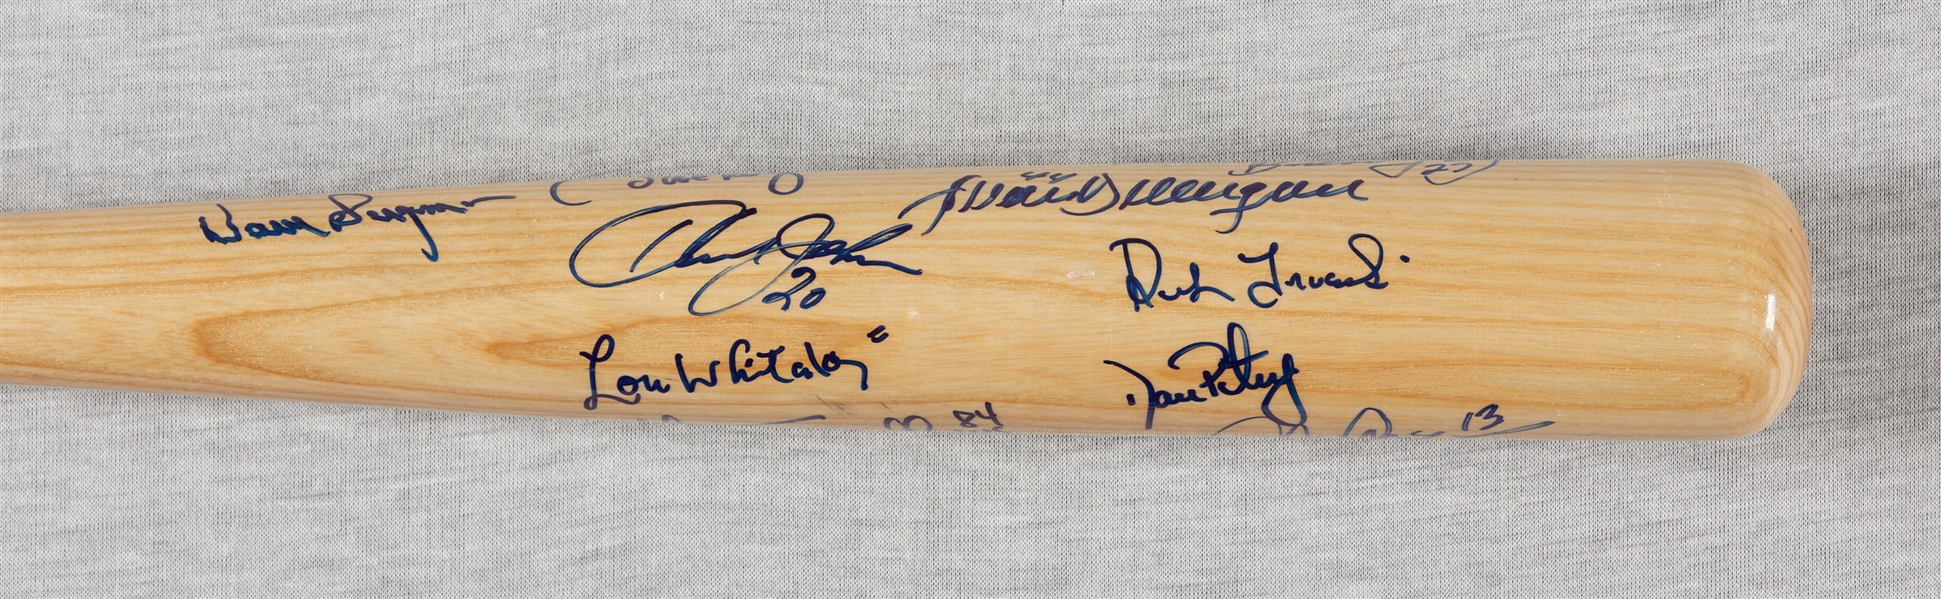 1984 Detroit Tigers World Champs Reunion Team-Signed Bat (18) (BAS)